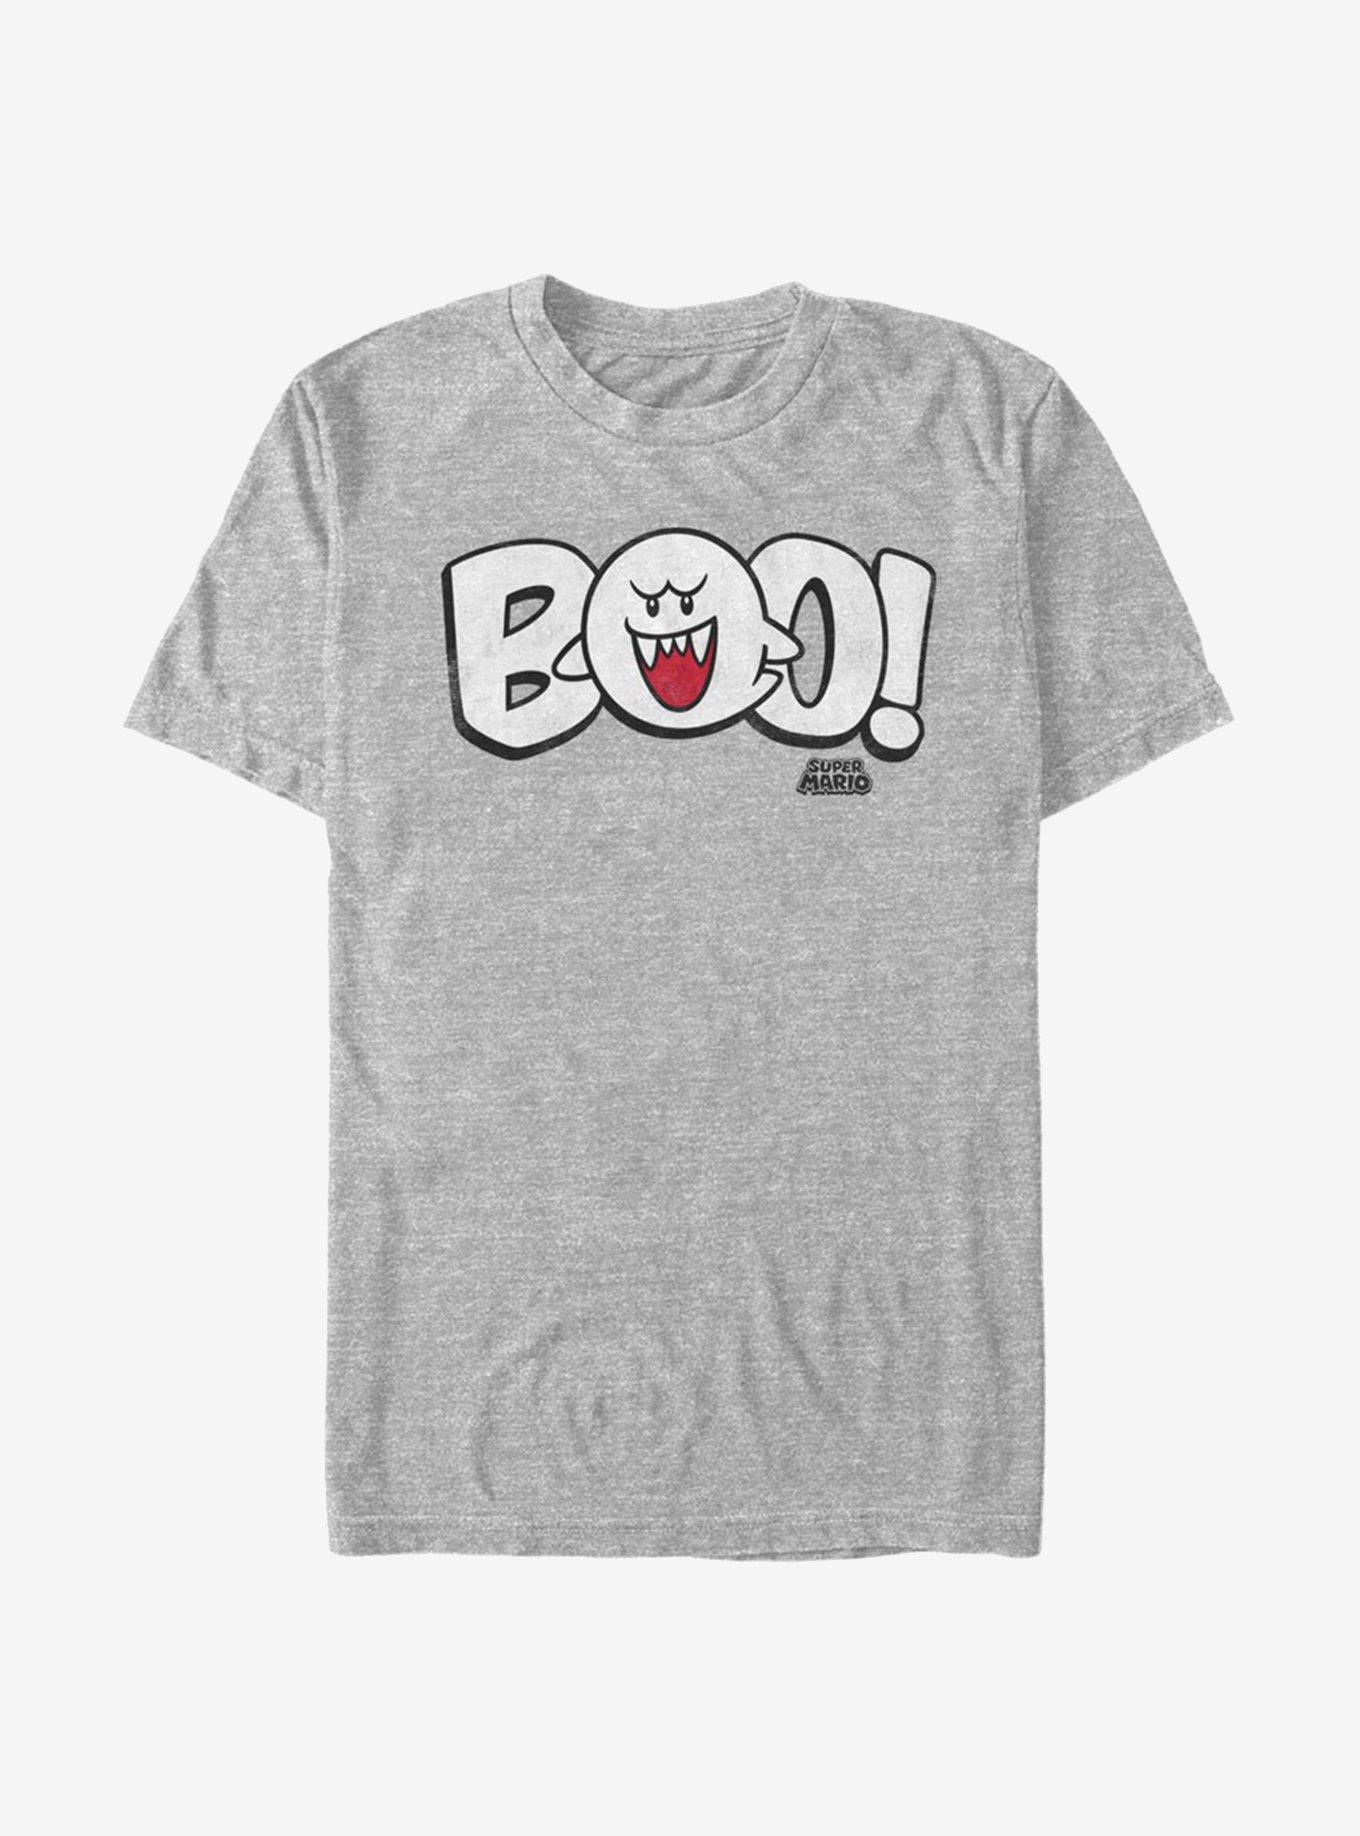 Super Mario Boo! T-Shirt